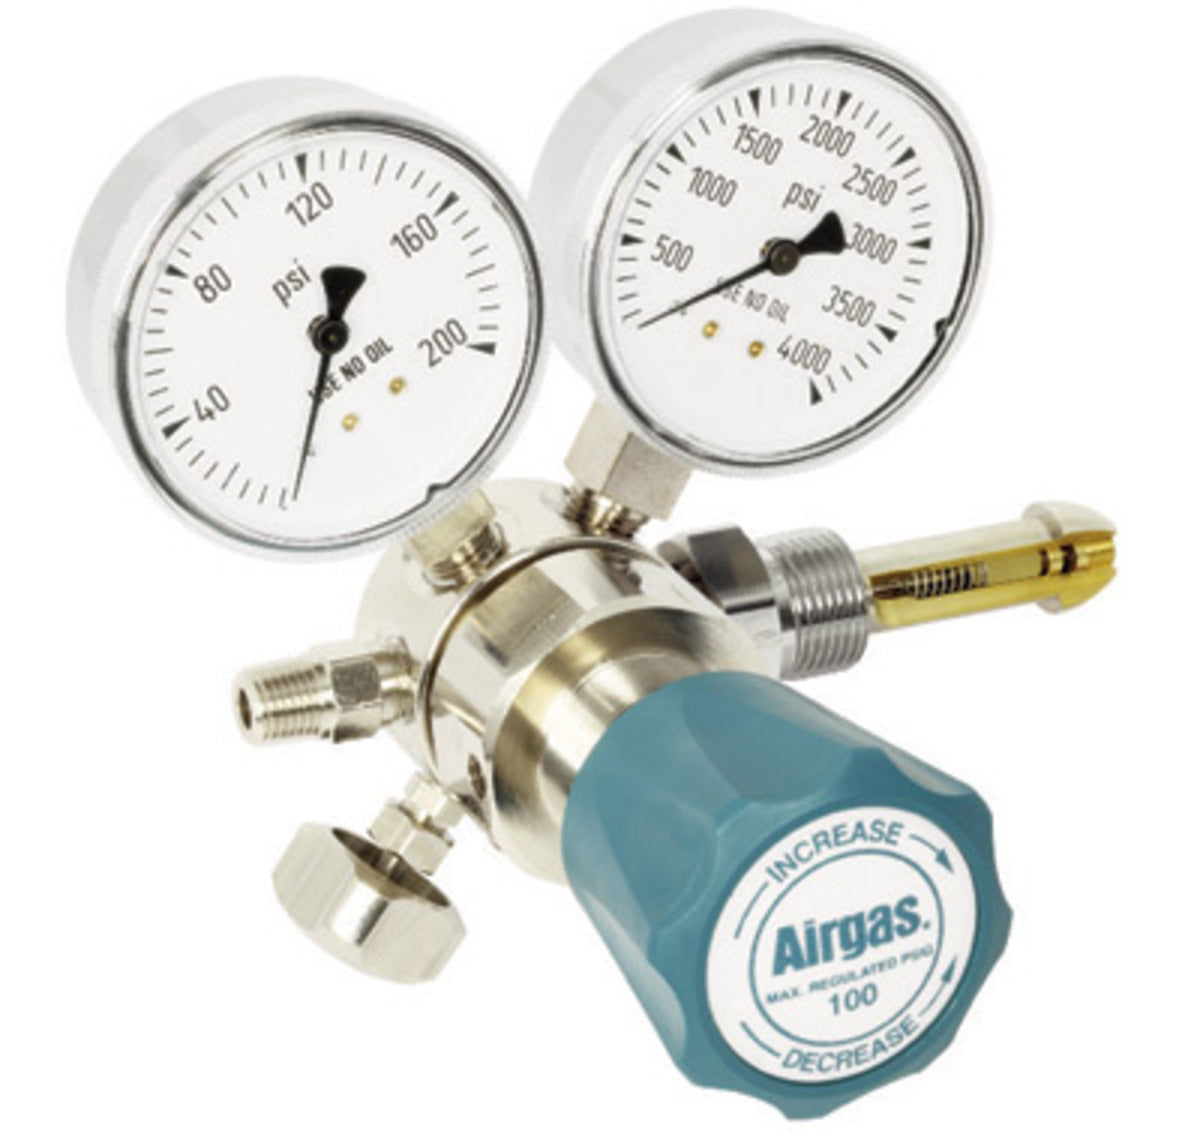 Airgas Two Stage Brass 0-250 psi General Purpose Cylinder Regulator CGA-350